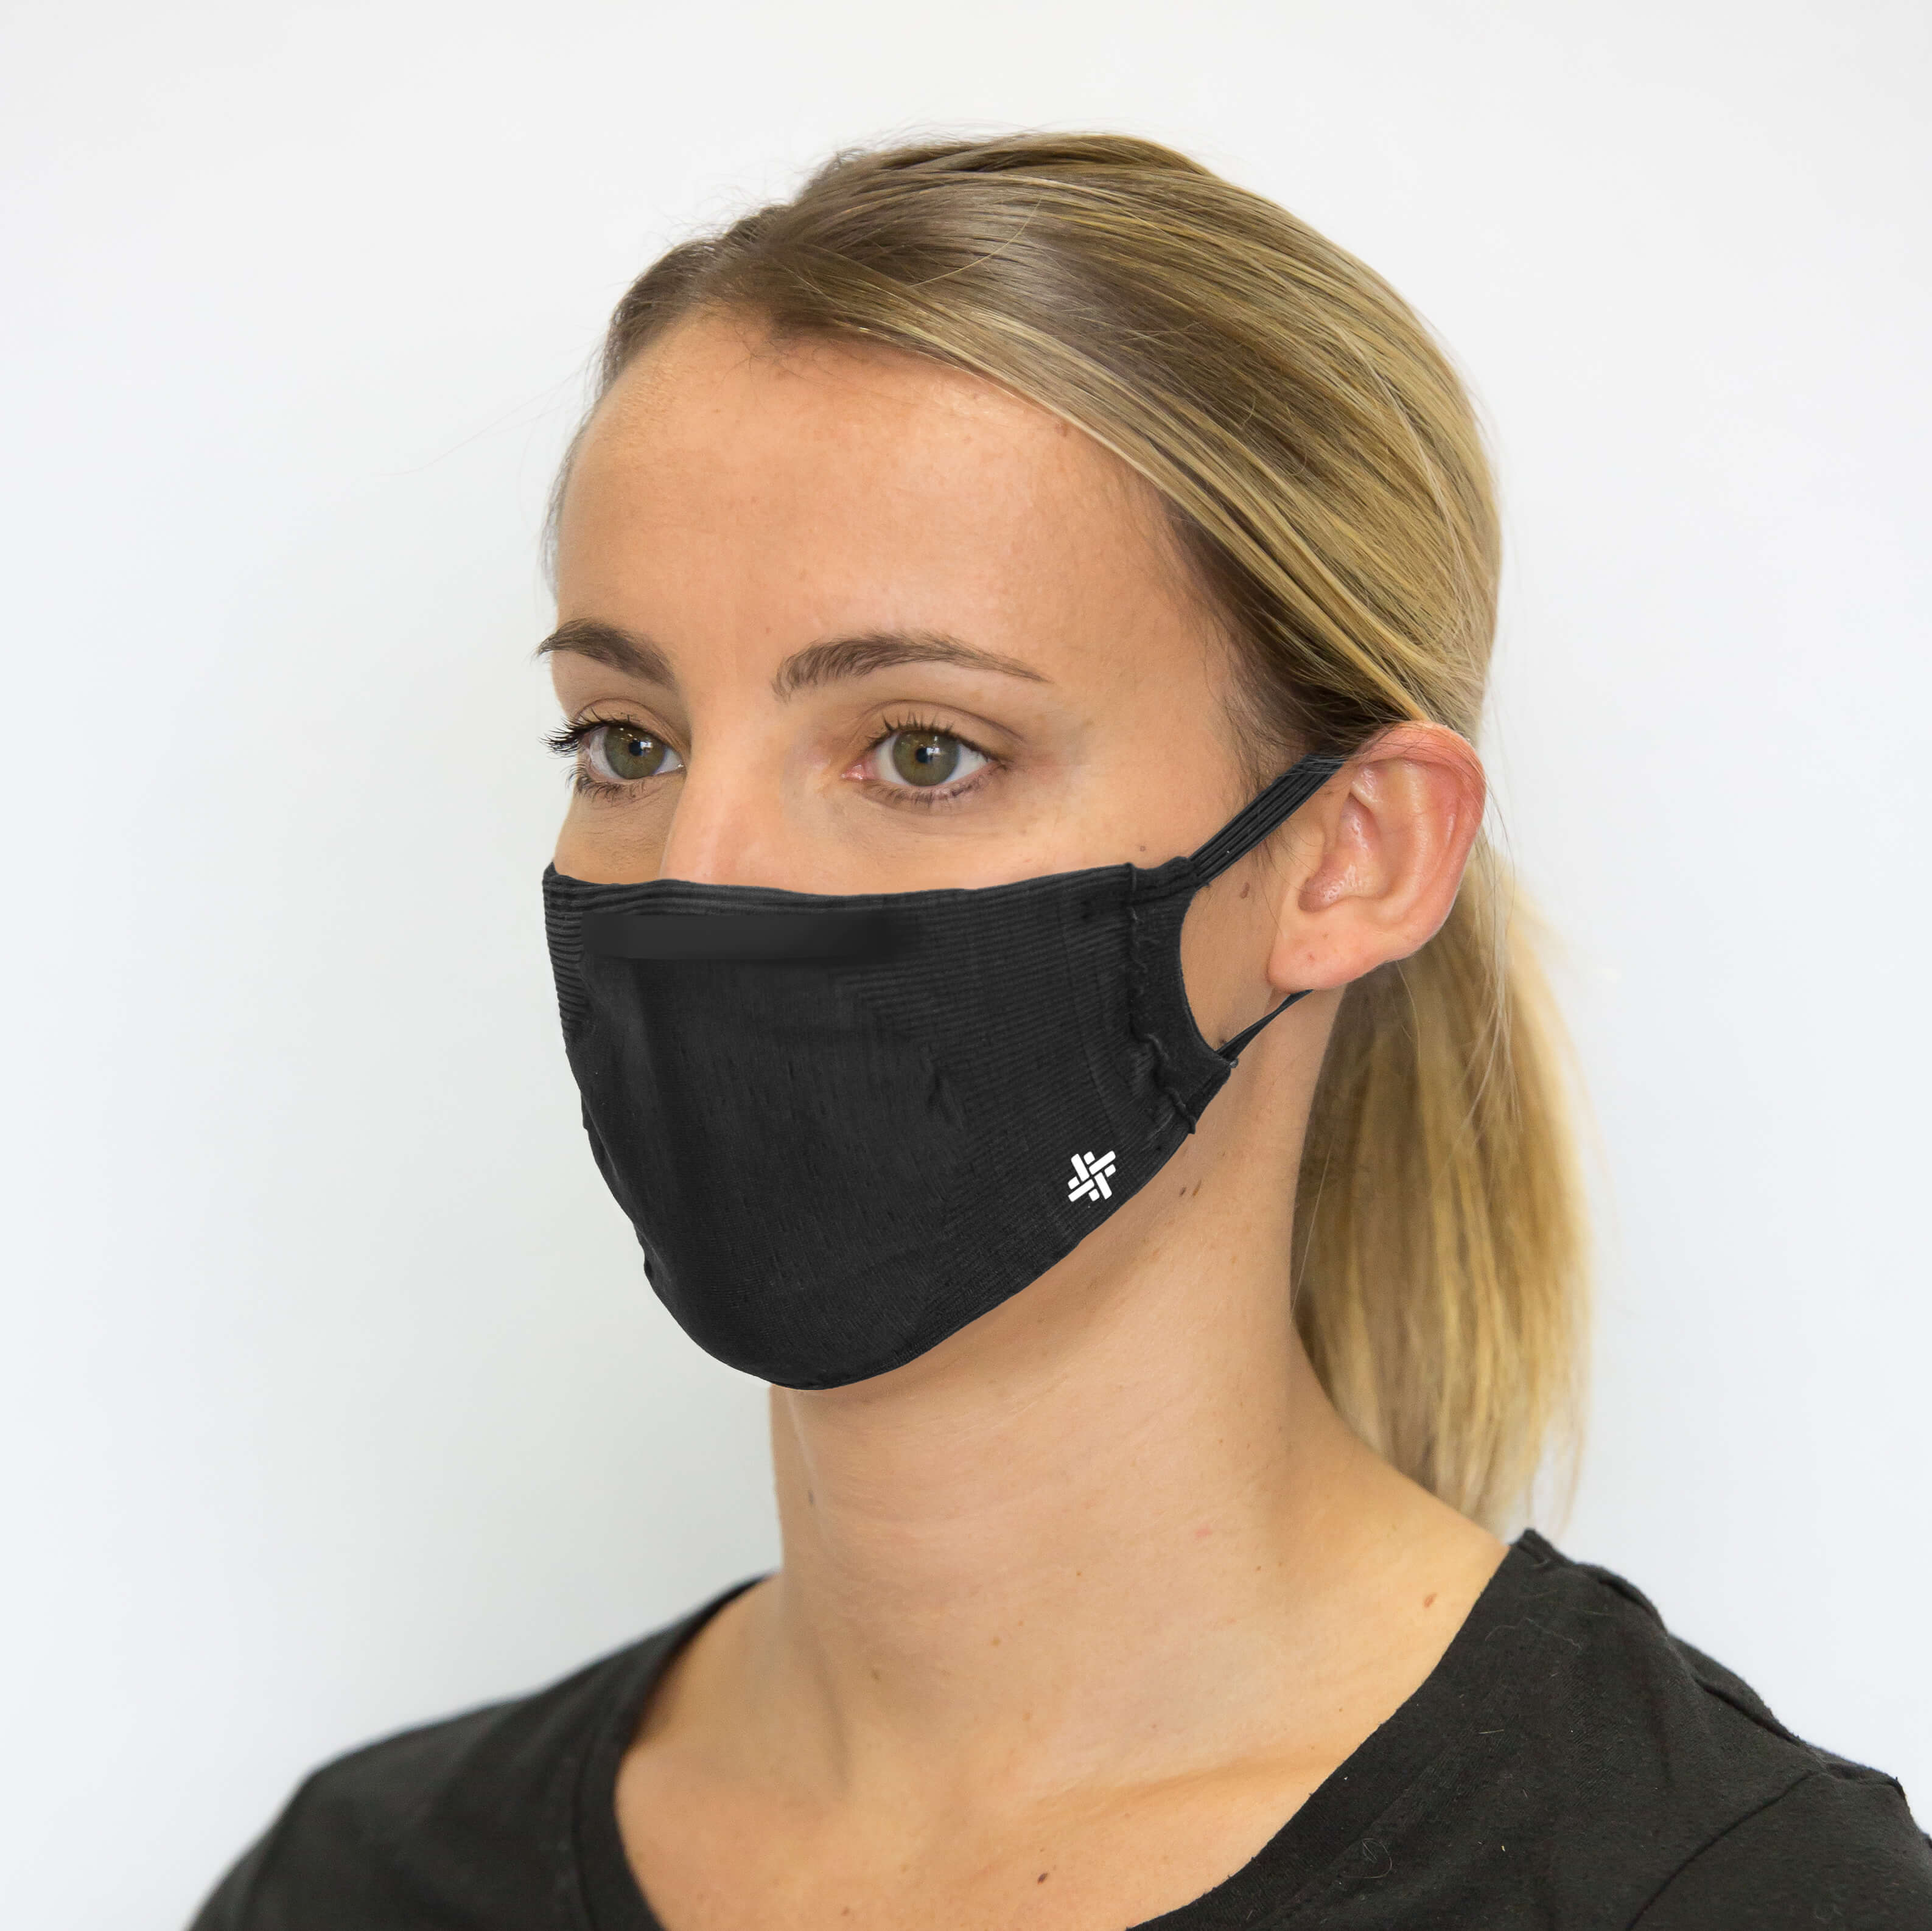 Nufabrx launches reusable copper masks